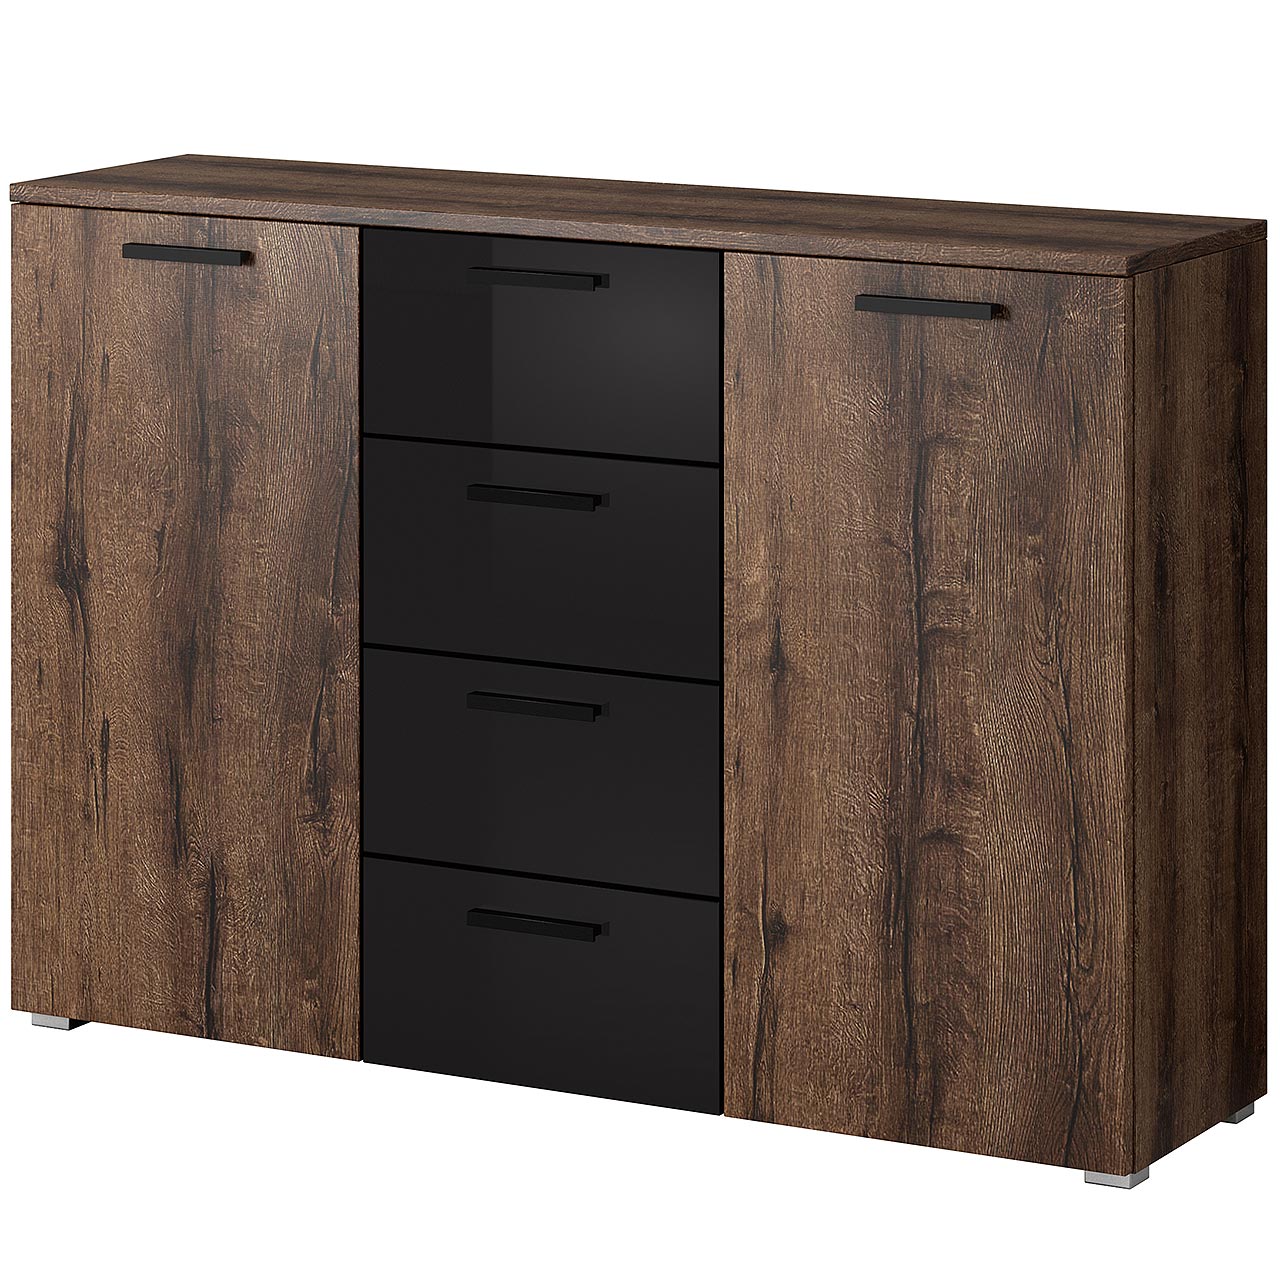 Storage cabinet GALAXY GX26 monastery oak / black